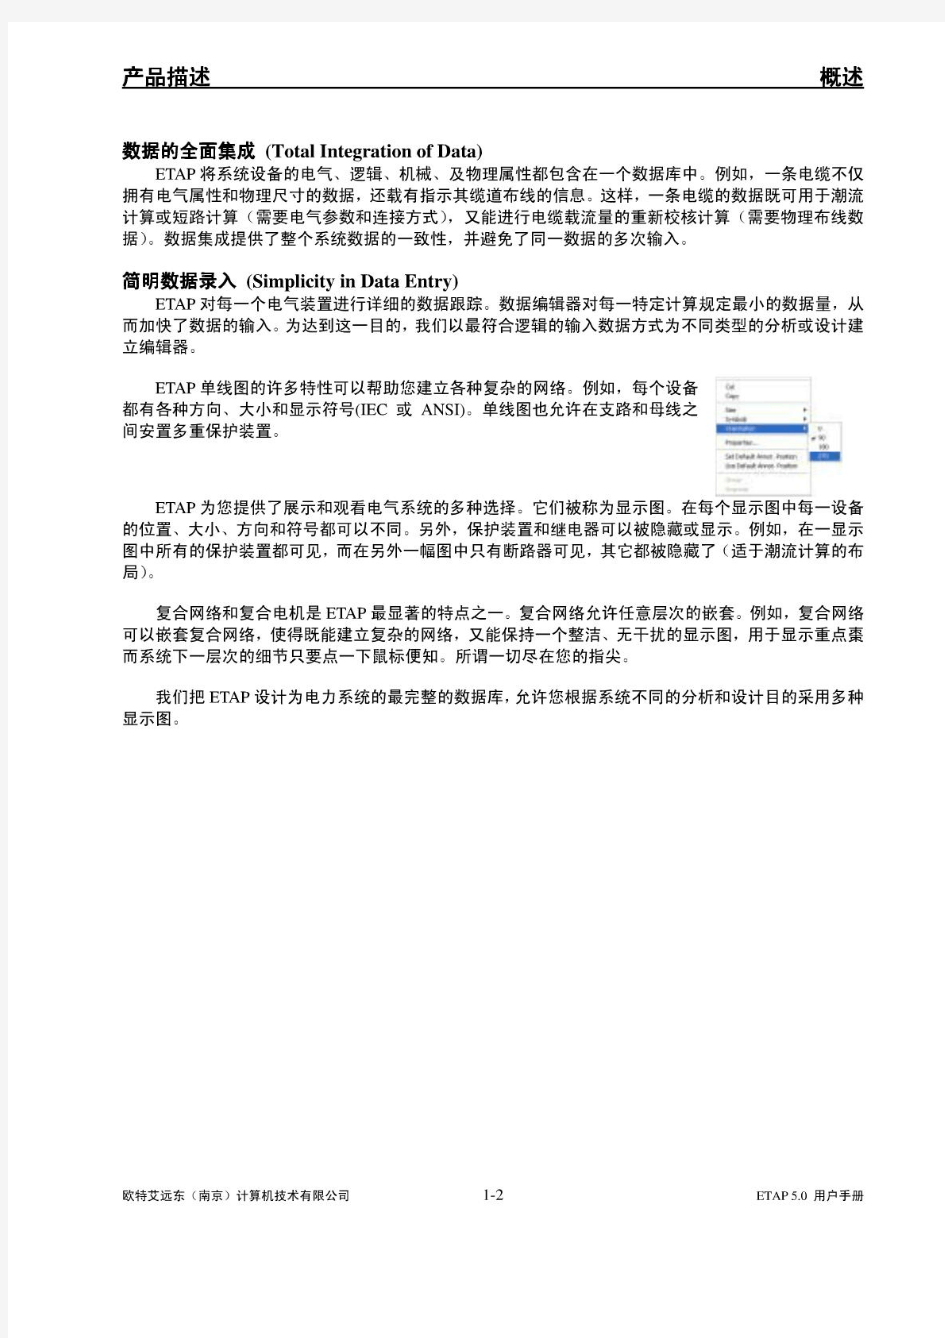 etap5.0中文手册Ch01 产品描述